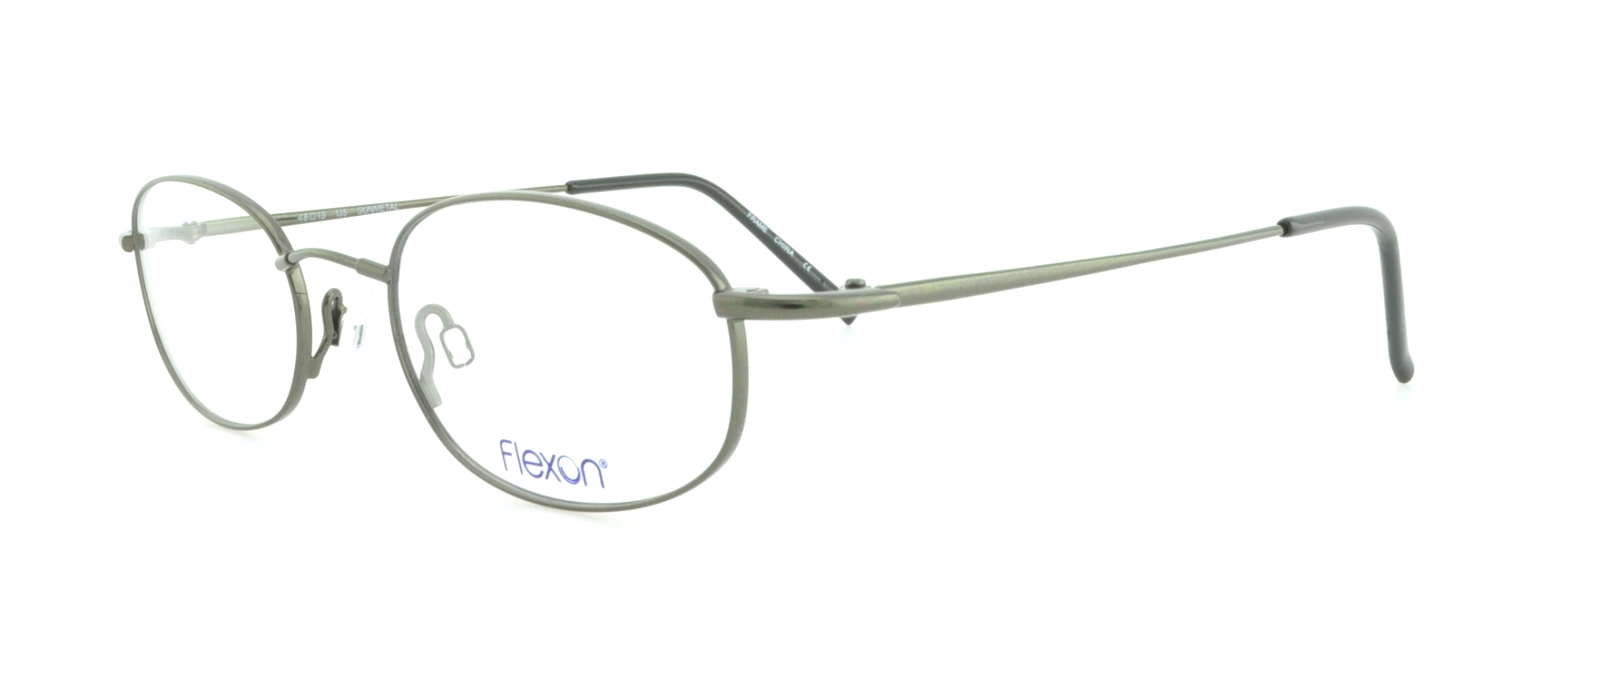 Picture of Flexon Eyeglasses 609